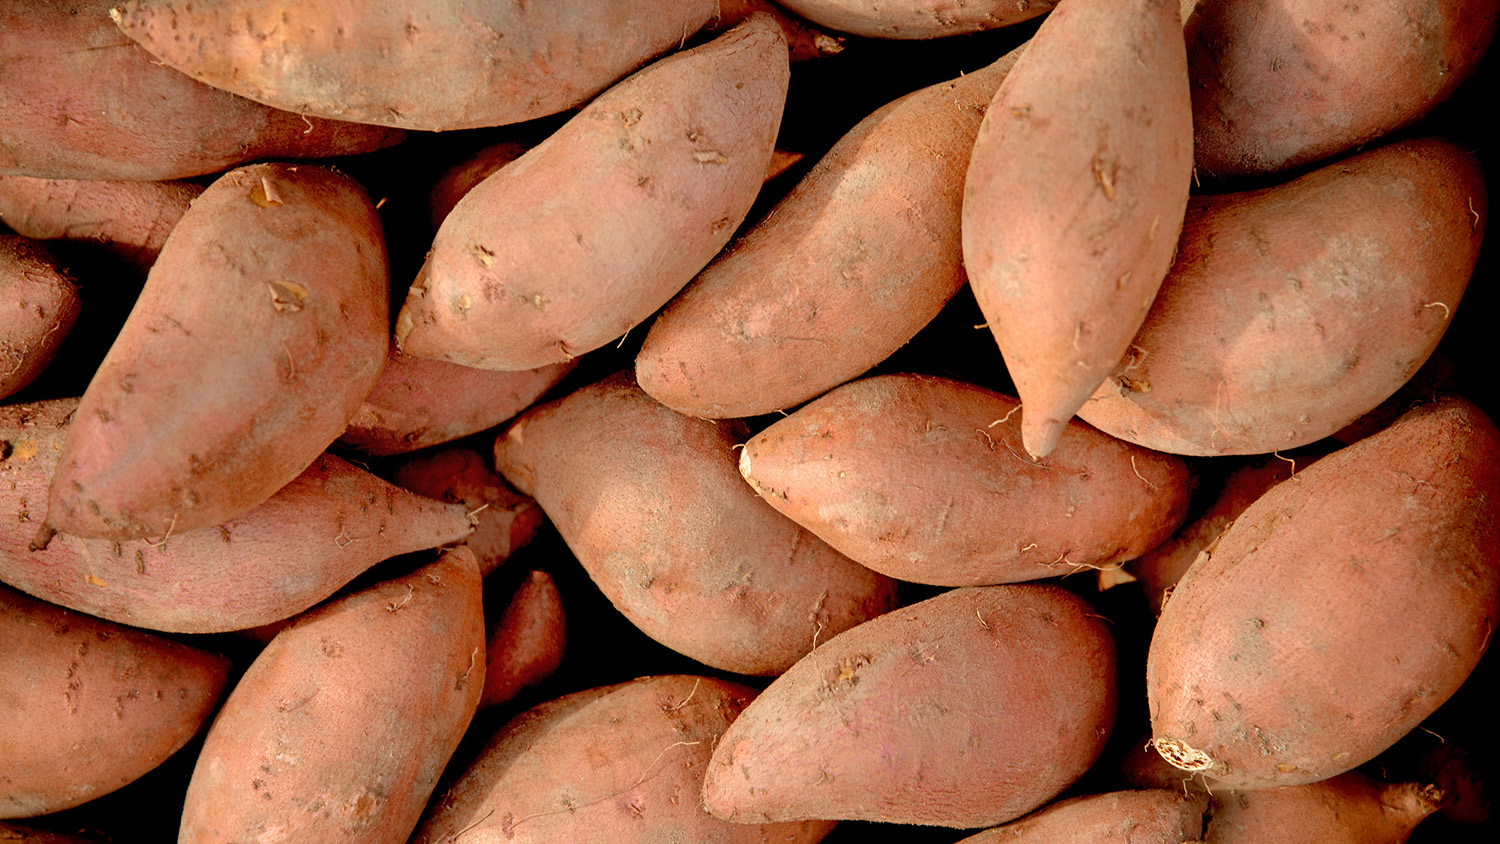 A bunch of sweetpotatoes